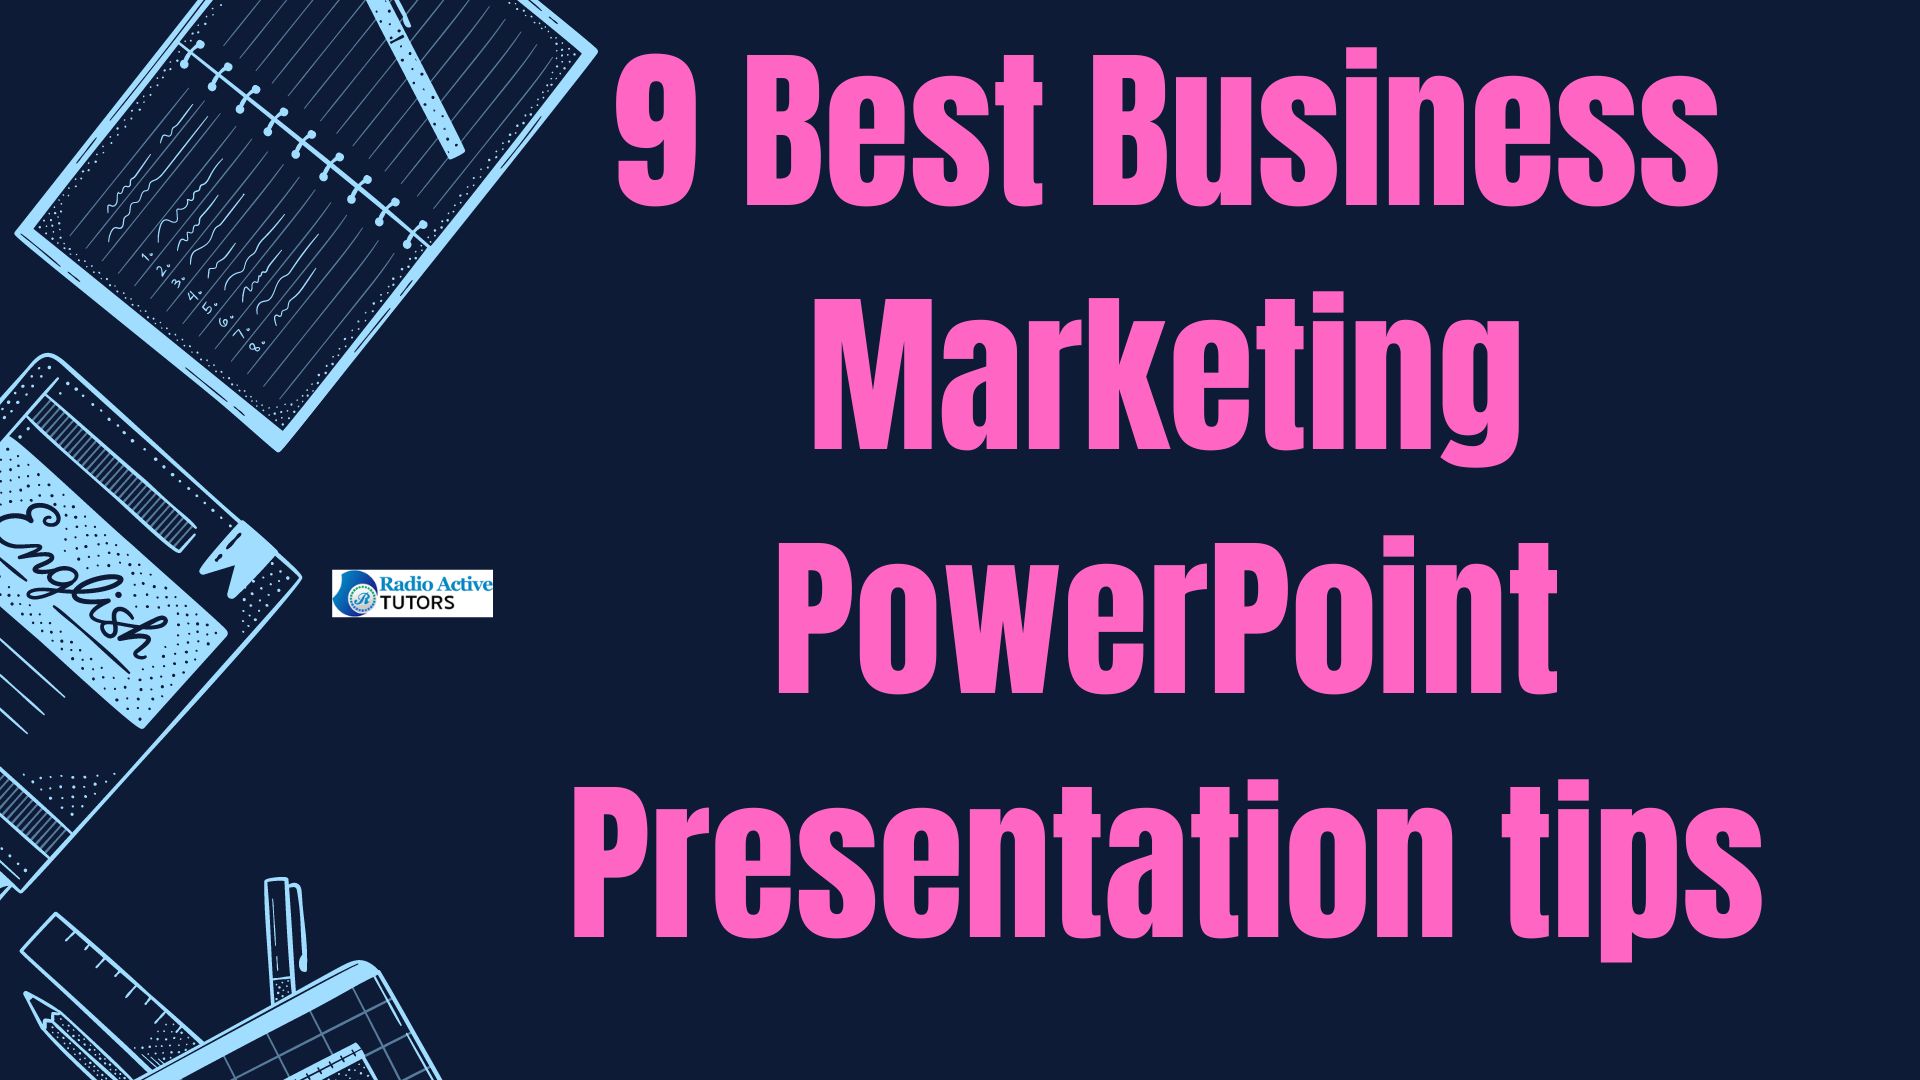 9 Best Business Marketing PowerPoint Presentation tips